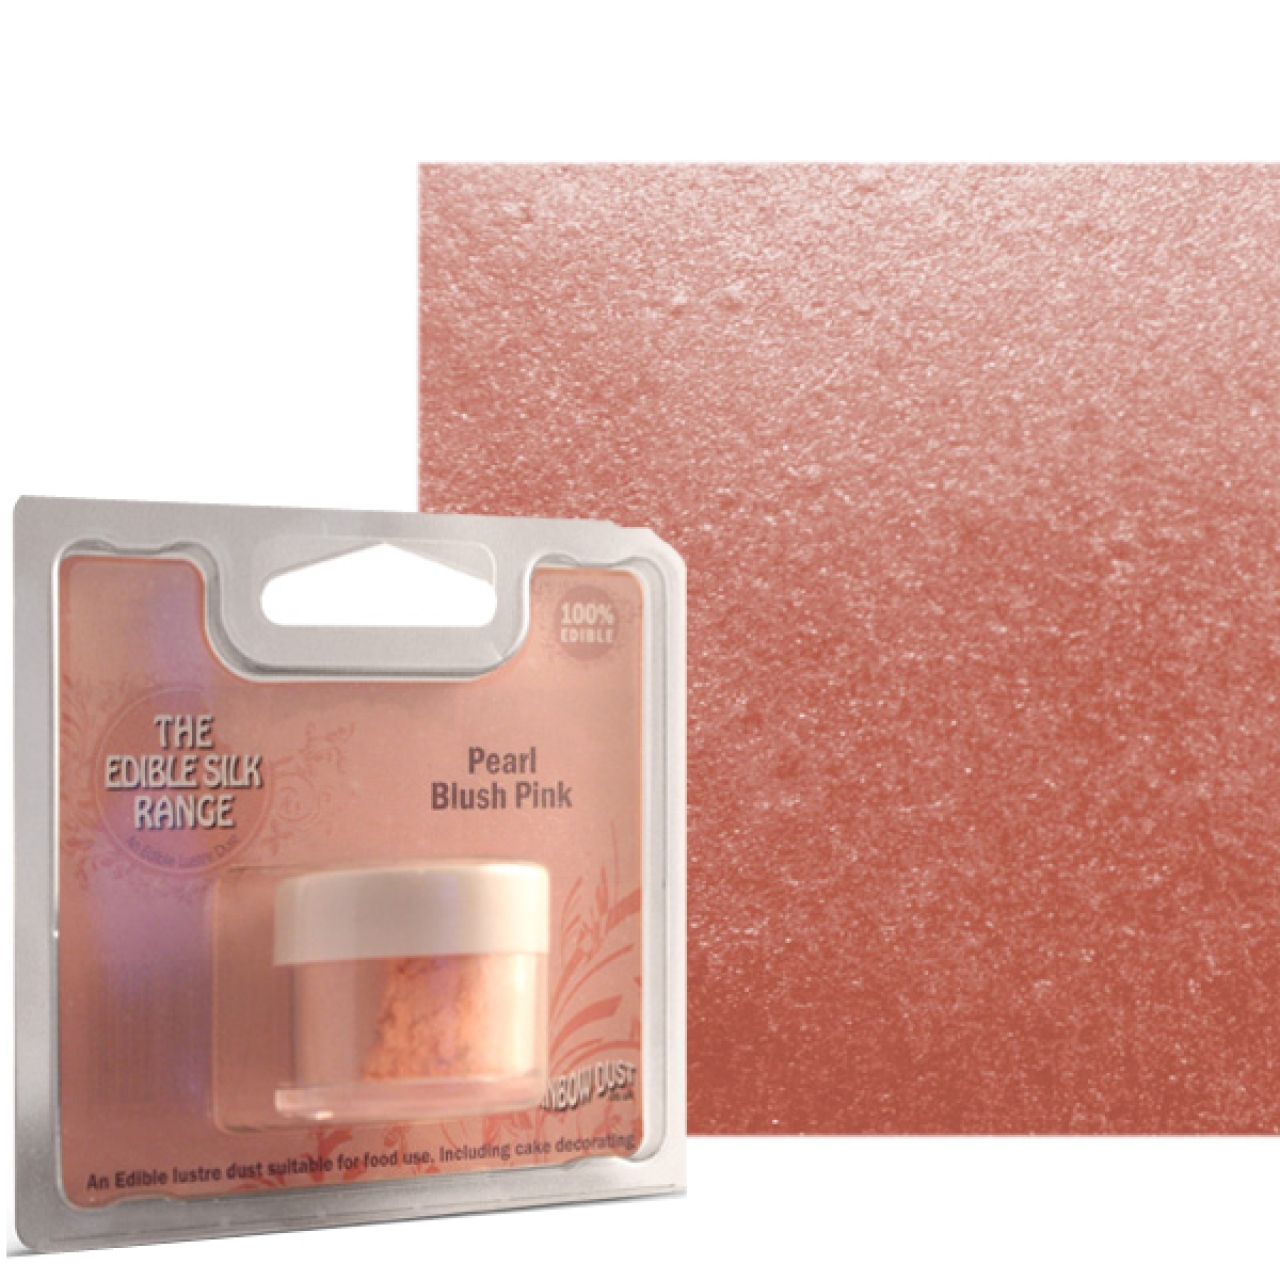 Speisefarbpulver "Perlmutt Blush Pink", 100 % essbar, Apricot-Rosa, 3 g, Rainbow Dust